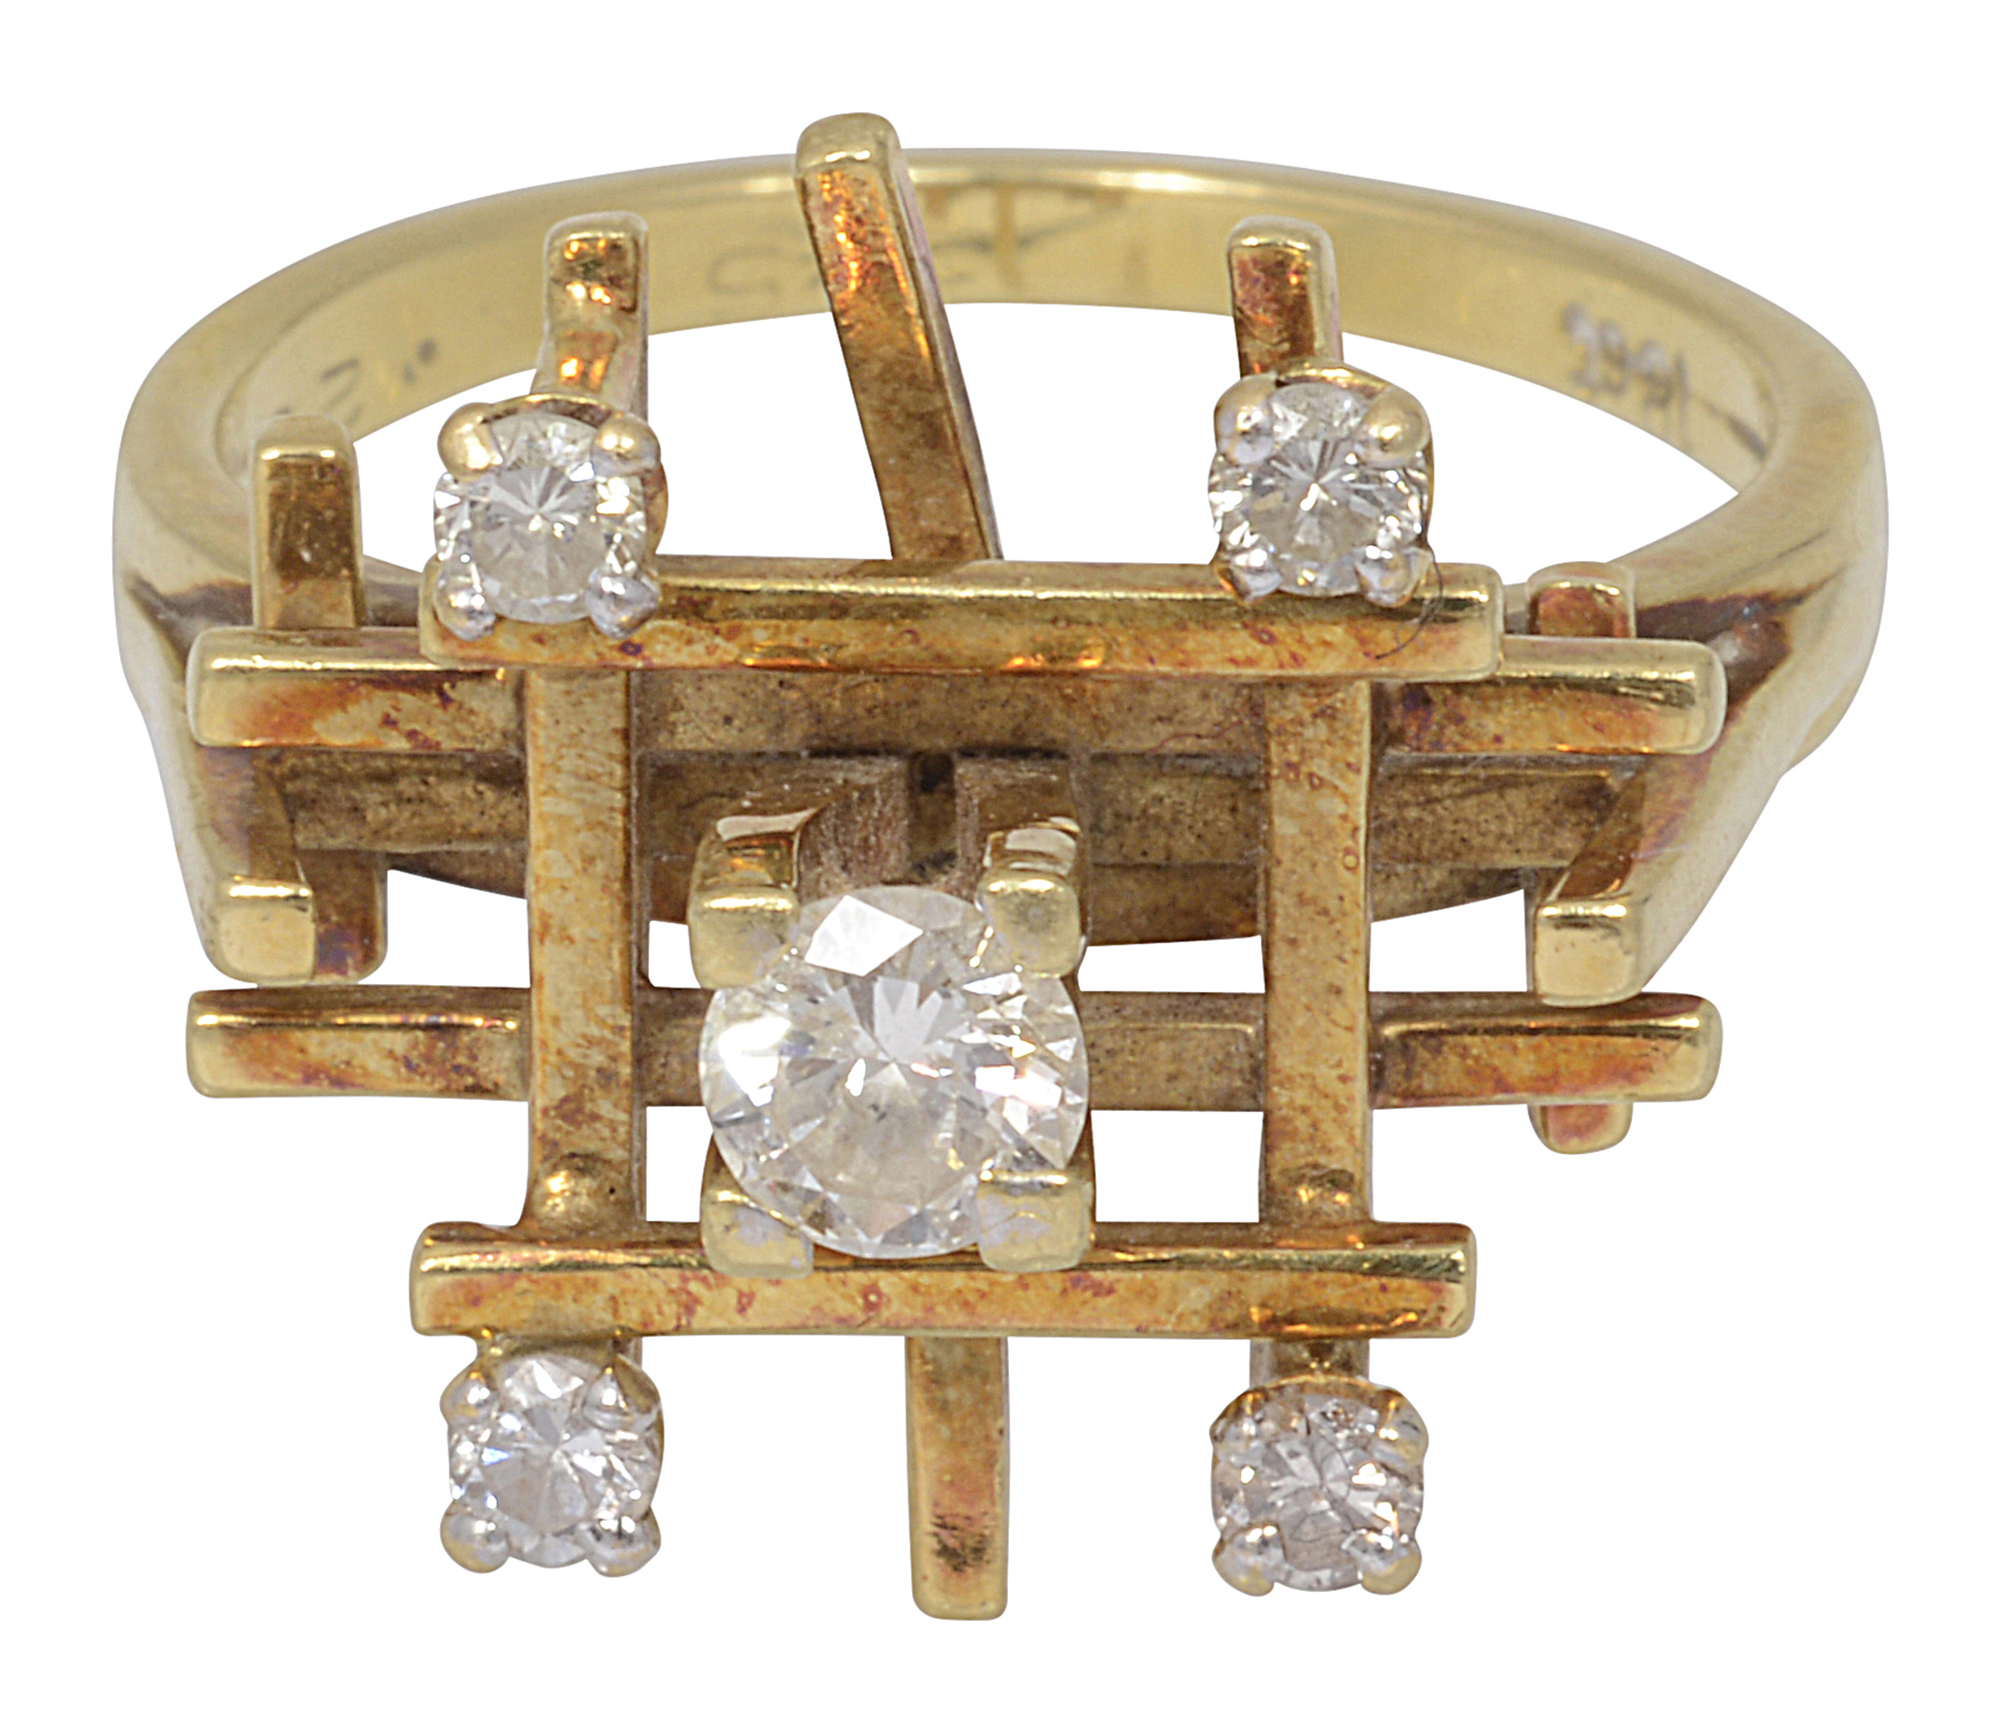 A mid 20th century diamond-set abstract geometric ring